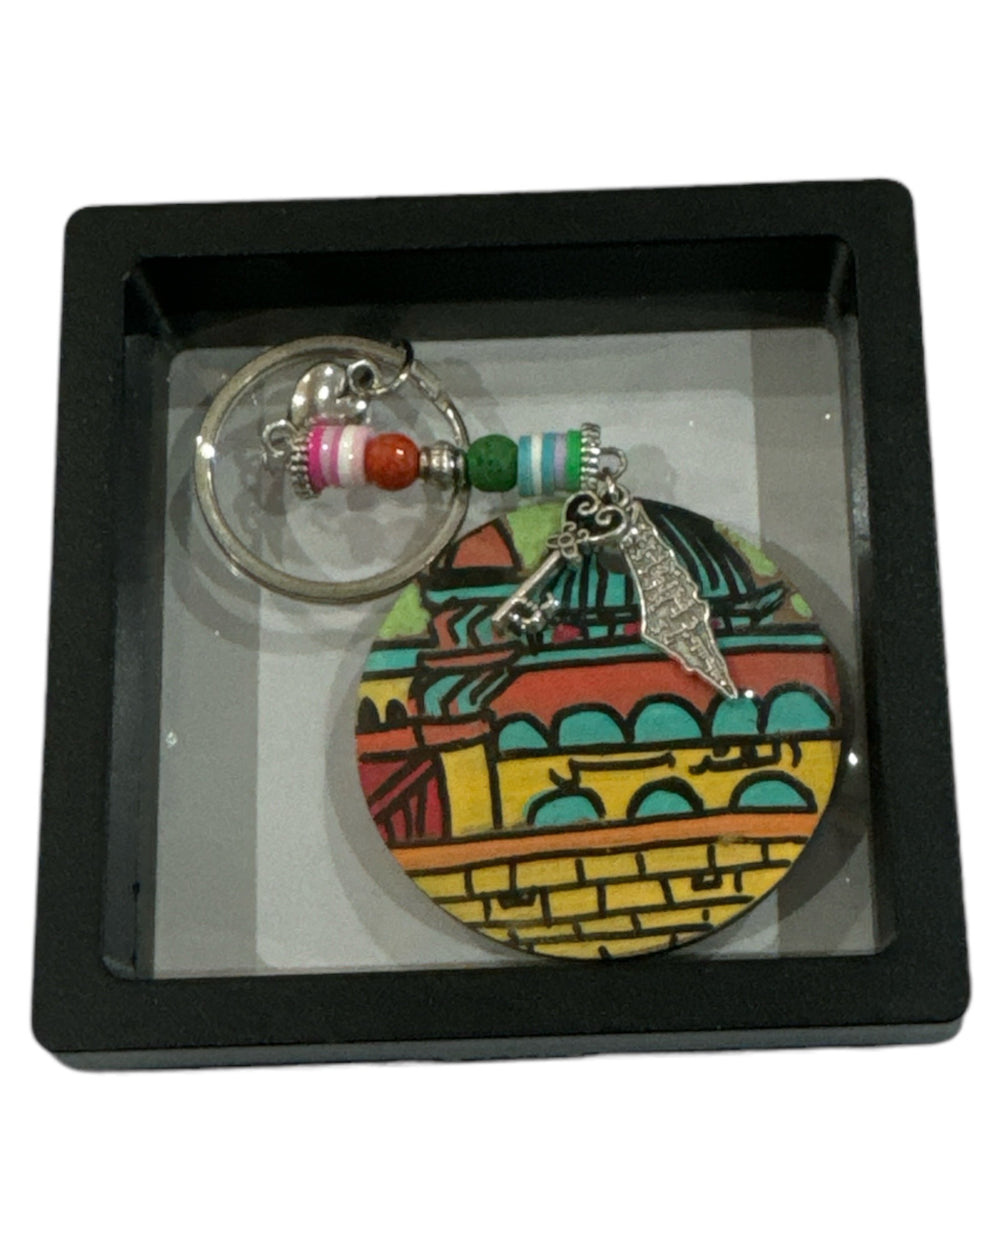 Majestic Al-Aqsa - Limited Edition Olive Wood Keychain